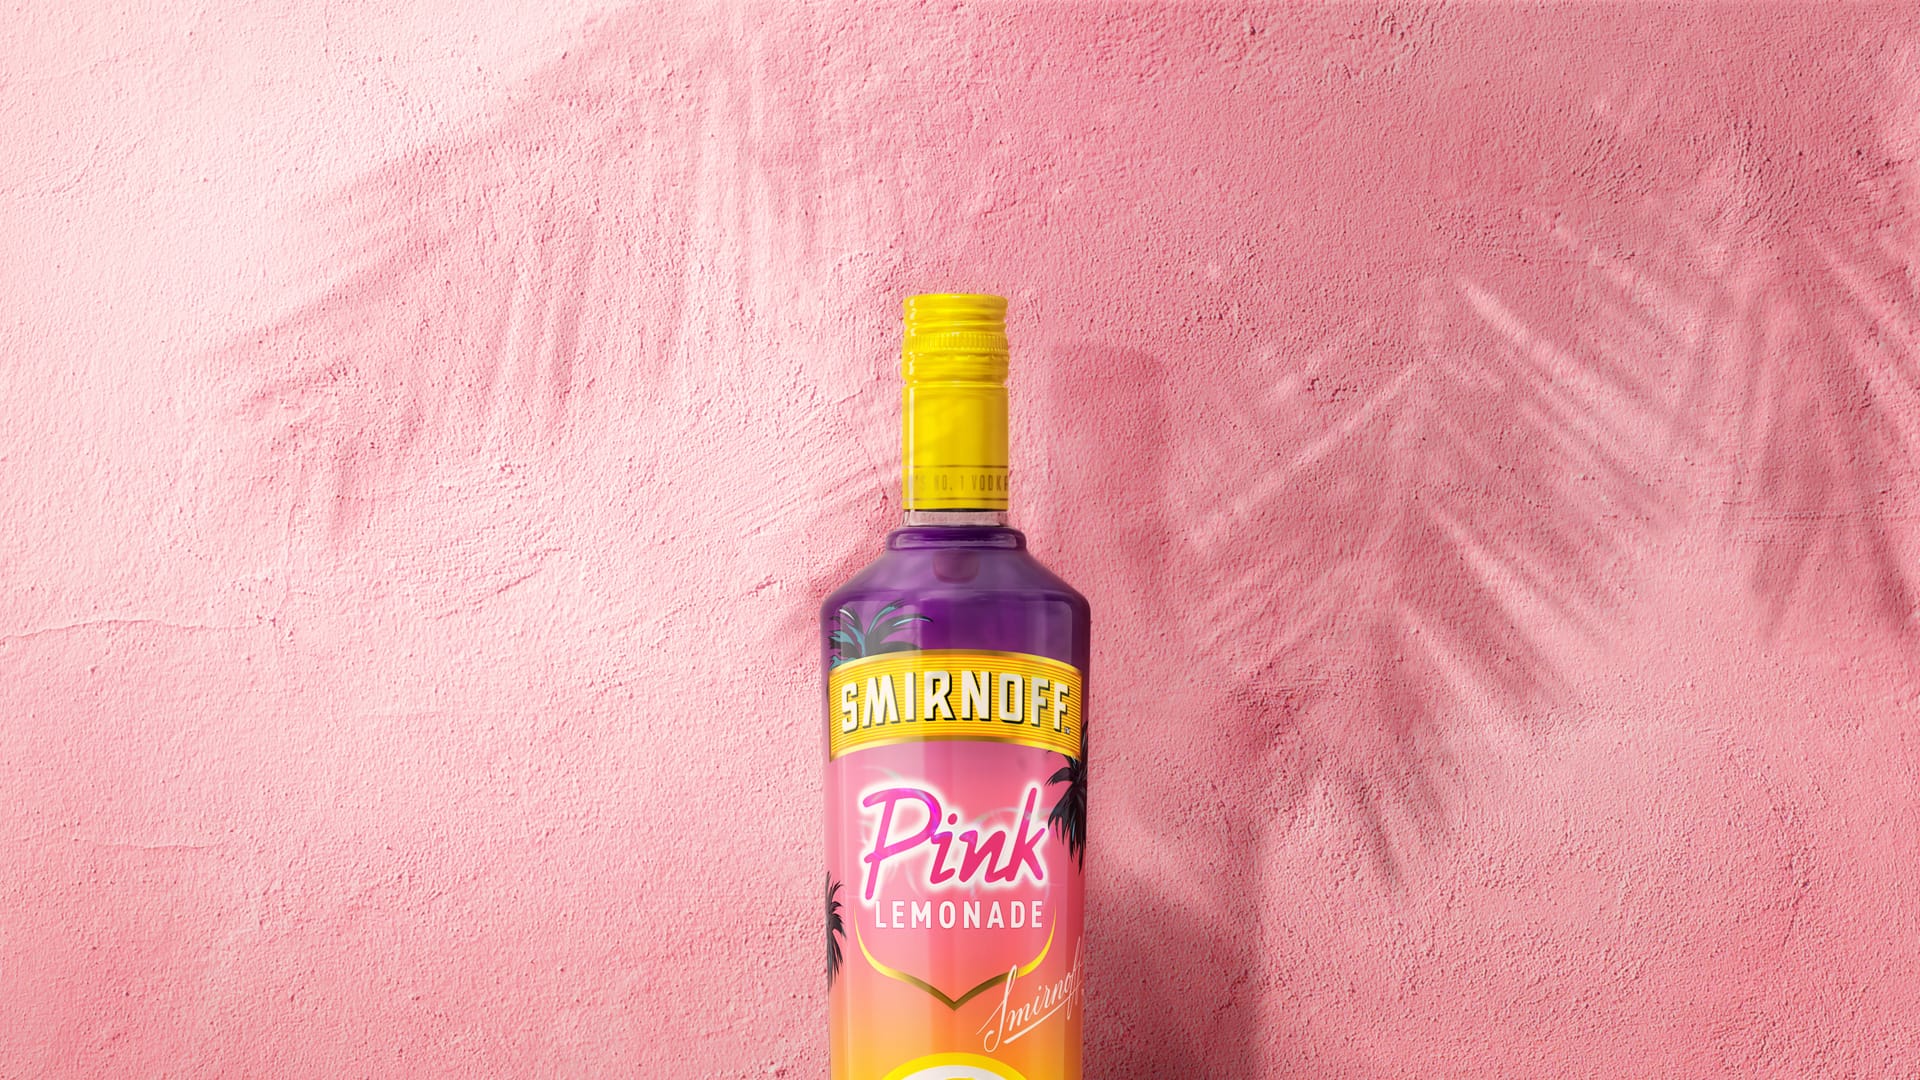 Smirnoff Pink Lemonade Vodka - 50ML